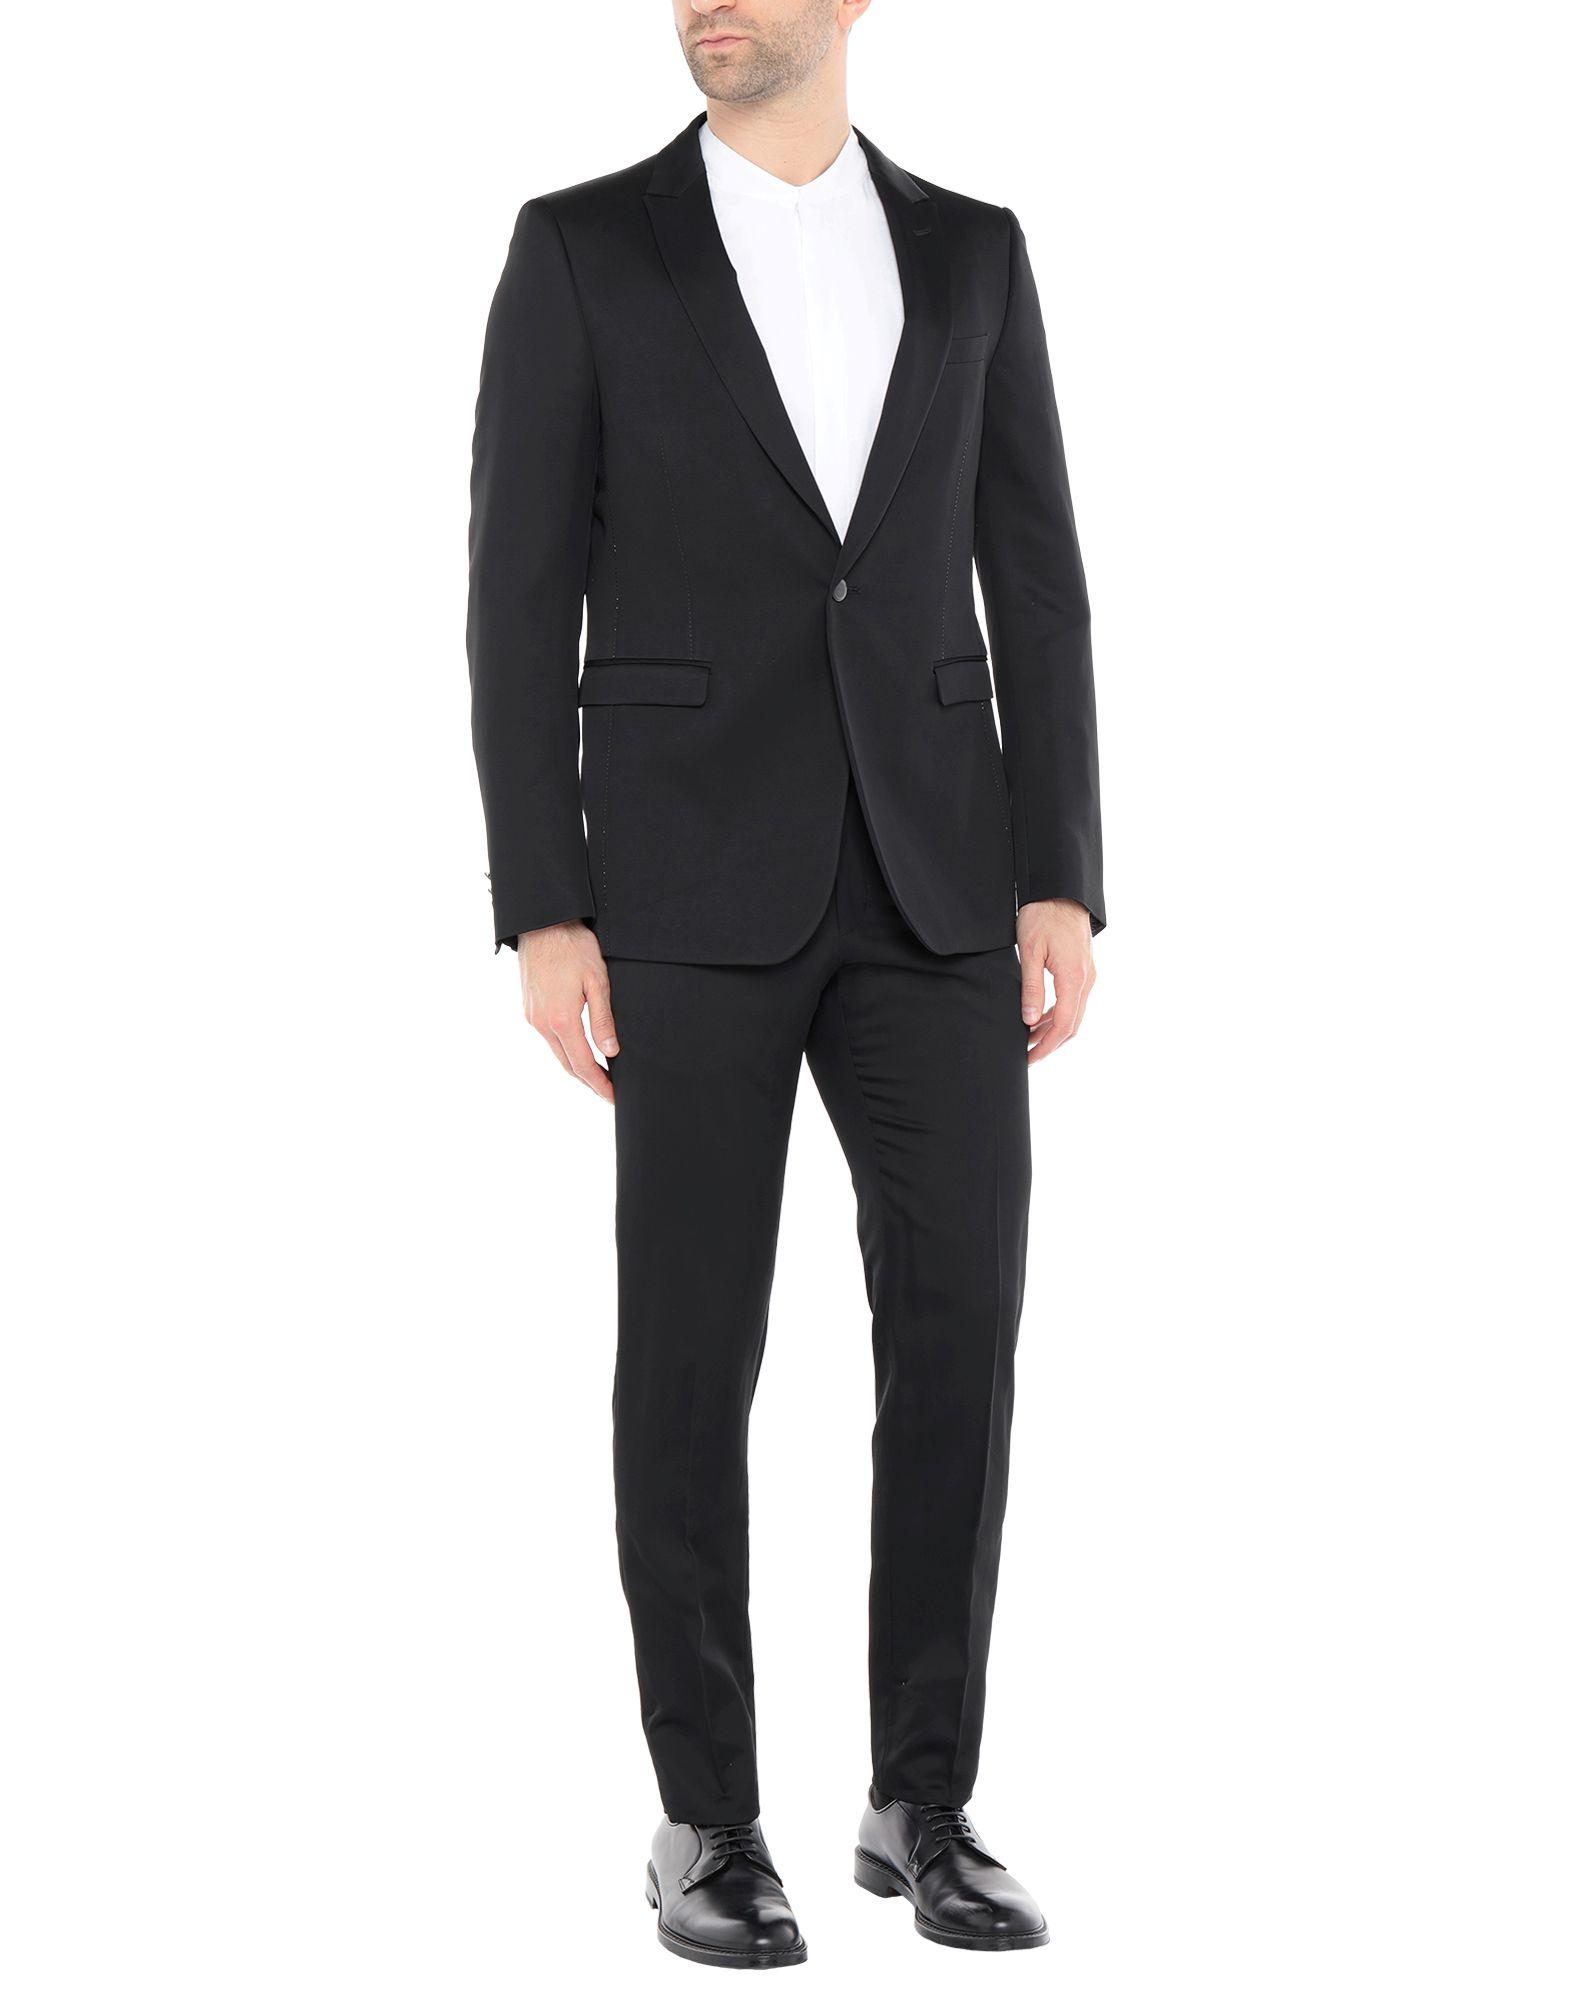 Pal Zileri Cerimonia Wool Suit in Black for Men - Lyst